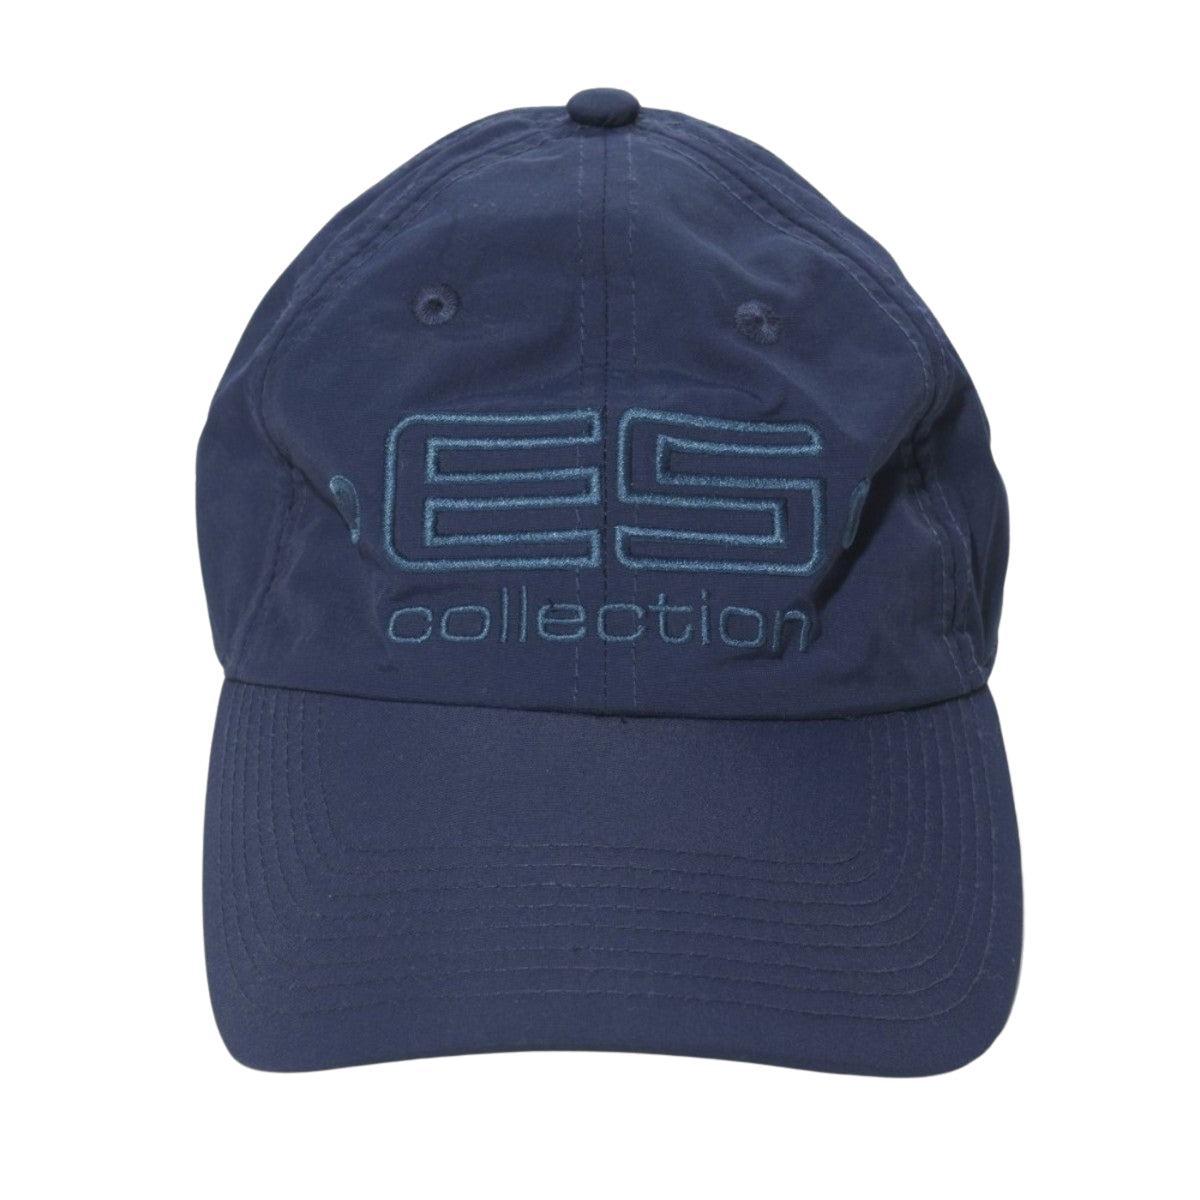 ES Collection Embroidered Baseball Cap Navy CAP002